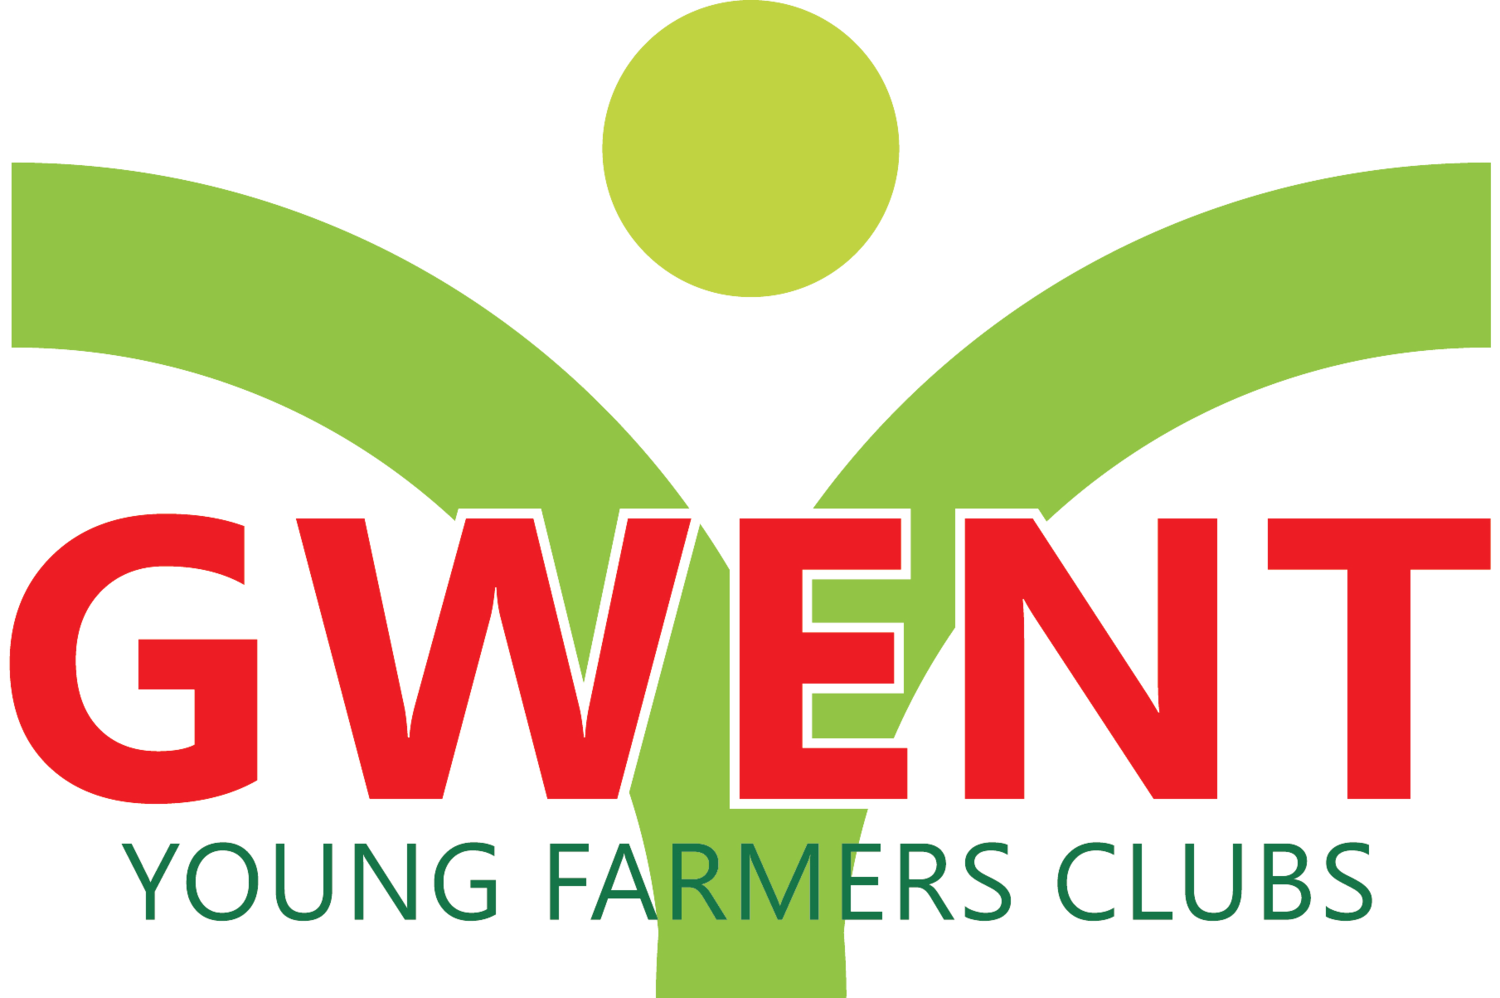 Gwent Young Farmers Clubs (Gwent YFC)